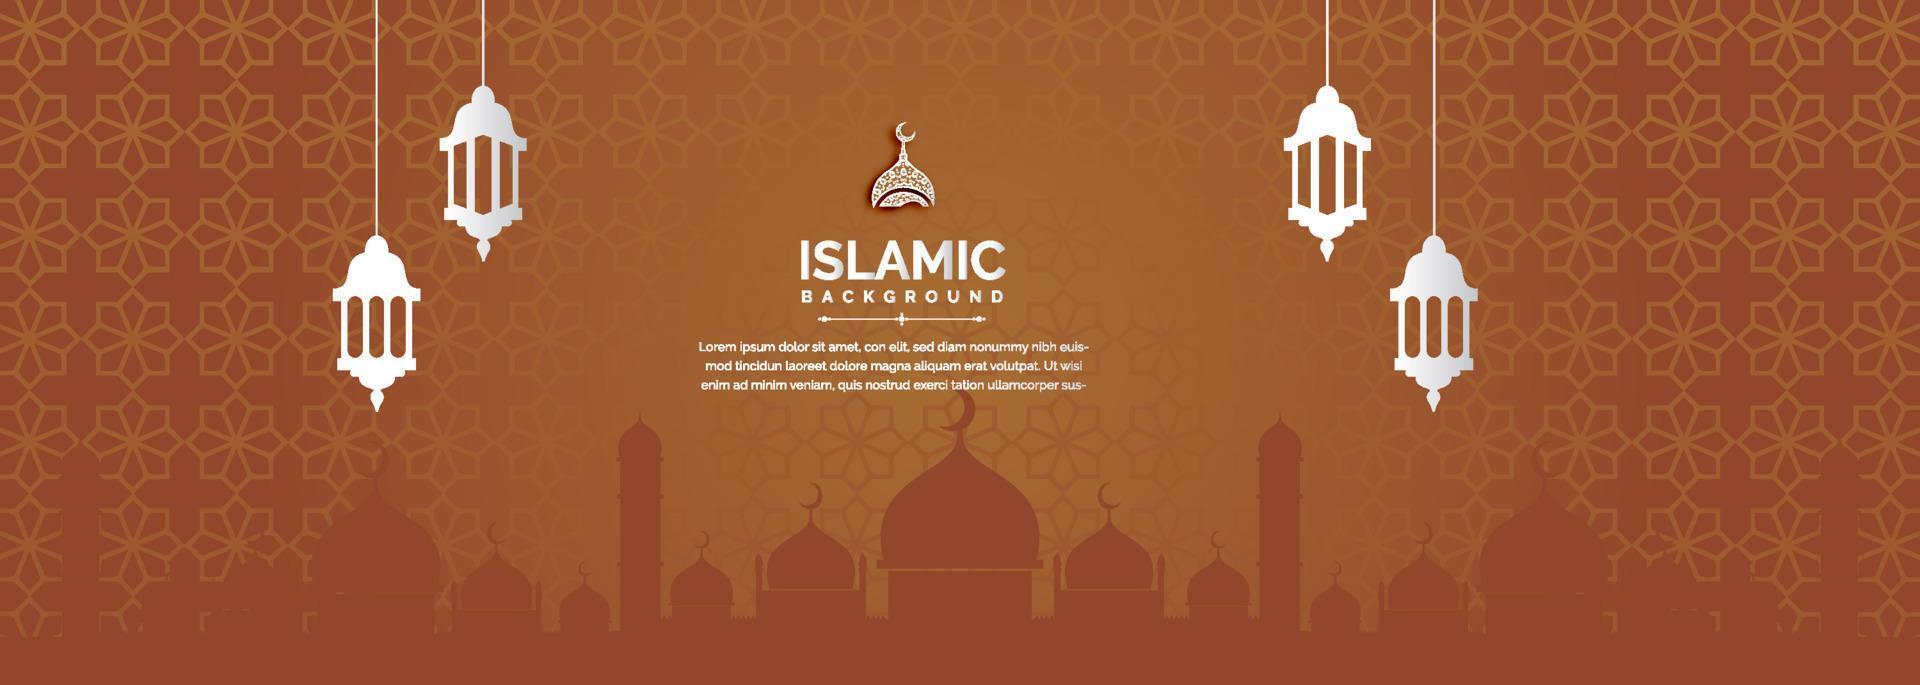 enkel islamic ramadan kareem baner bakgrund vektor